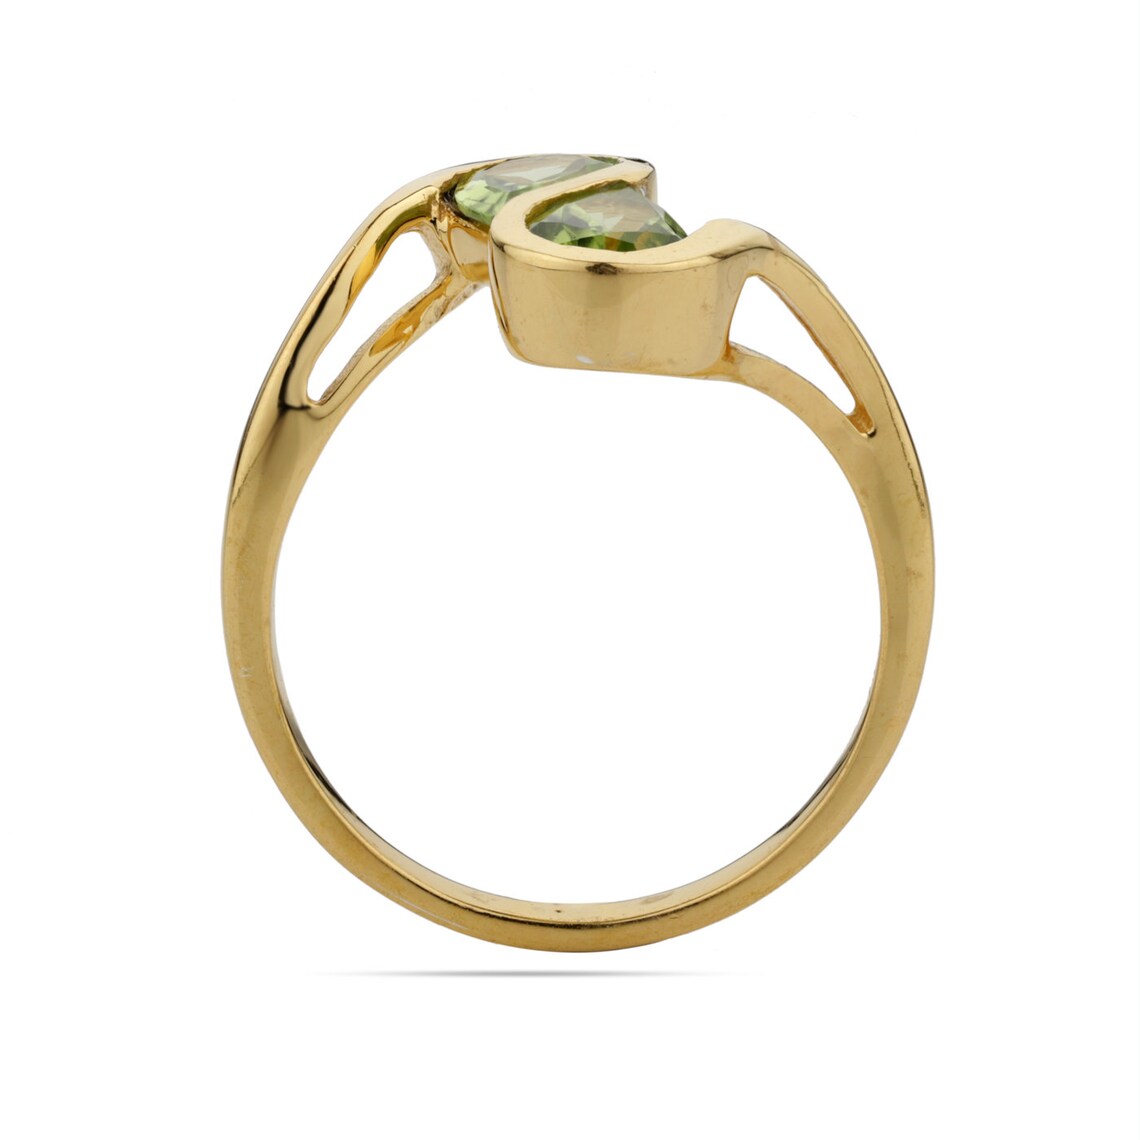 Natural Green Peridot Ring - Gold Ring - Handmade Pear Cut Gemstone Ring - 925 Sterling Silver Ring - - Birthstone Ring - Two Stone Ring